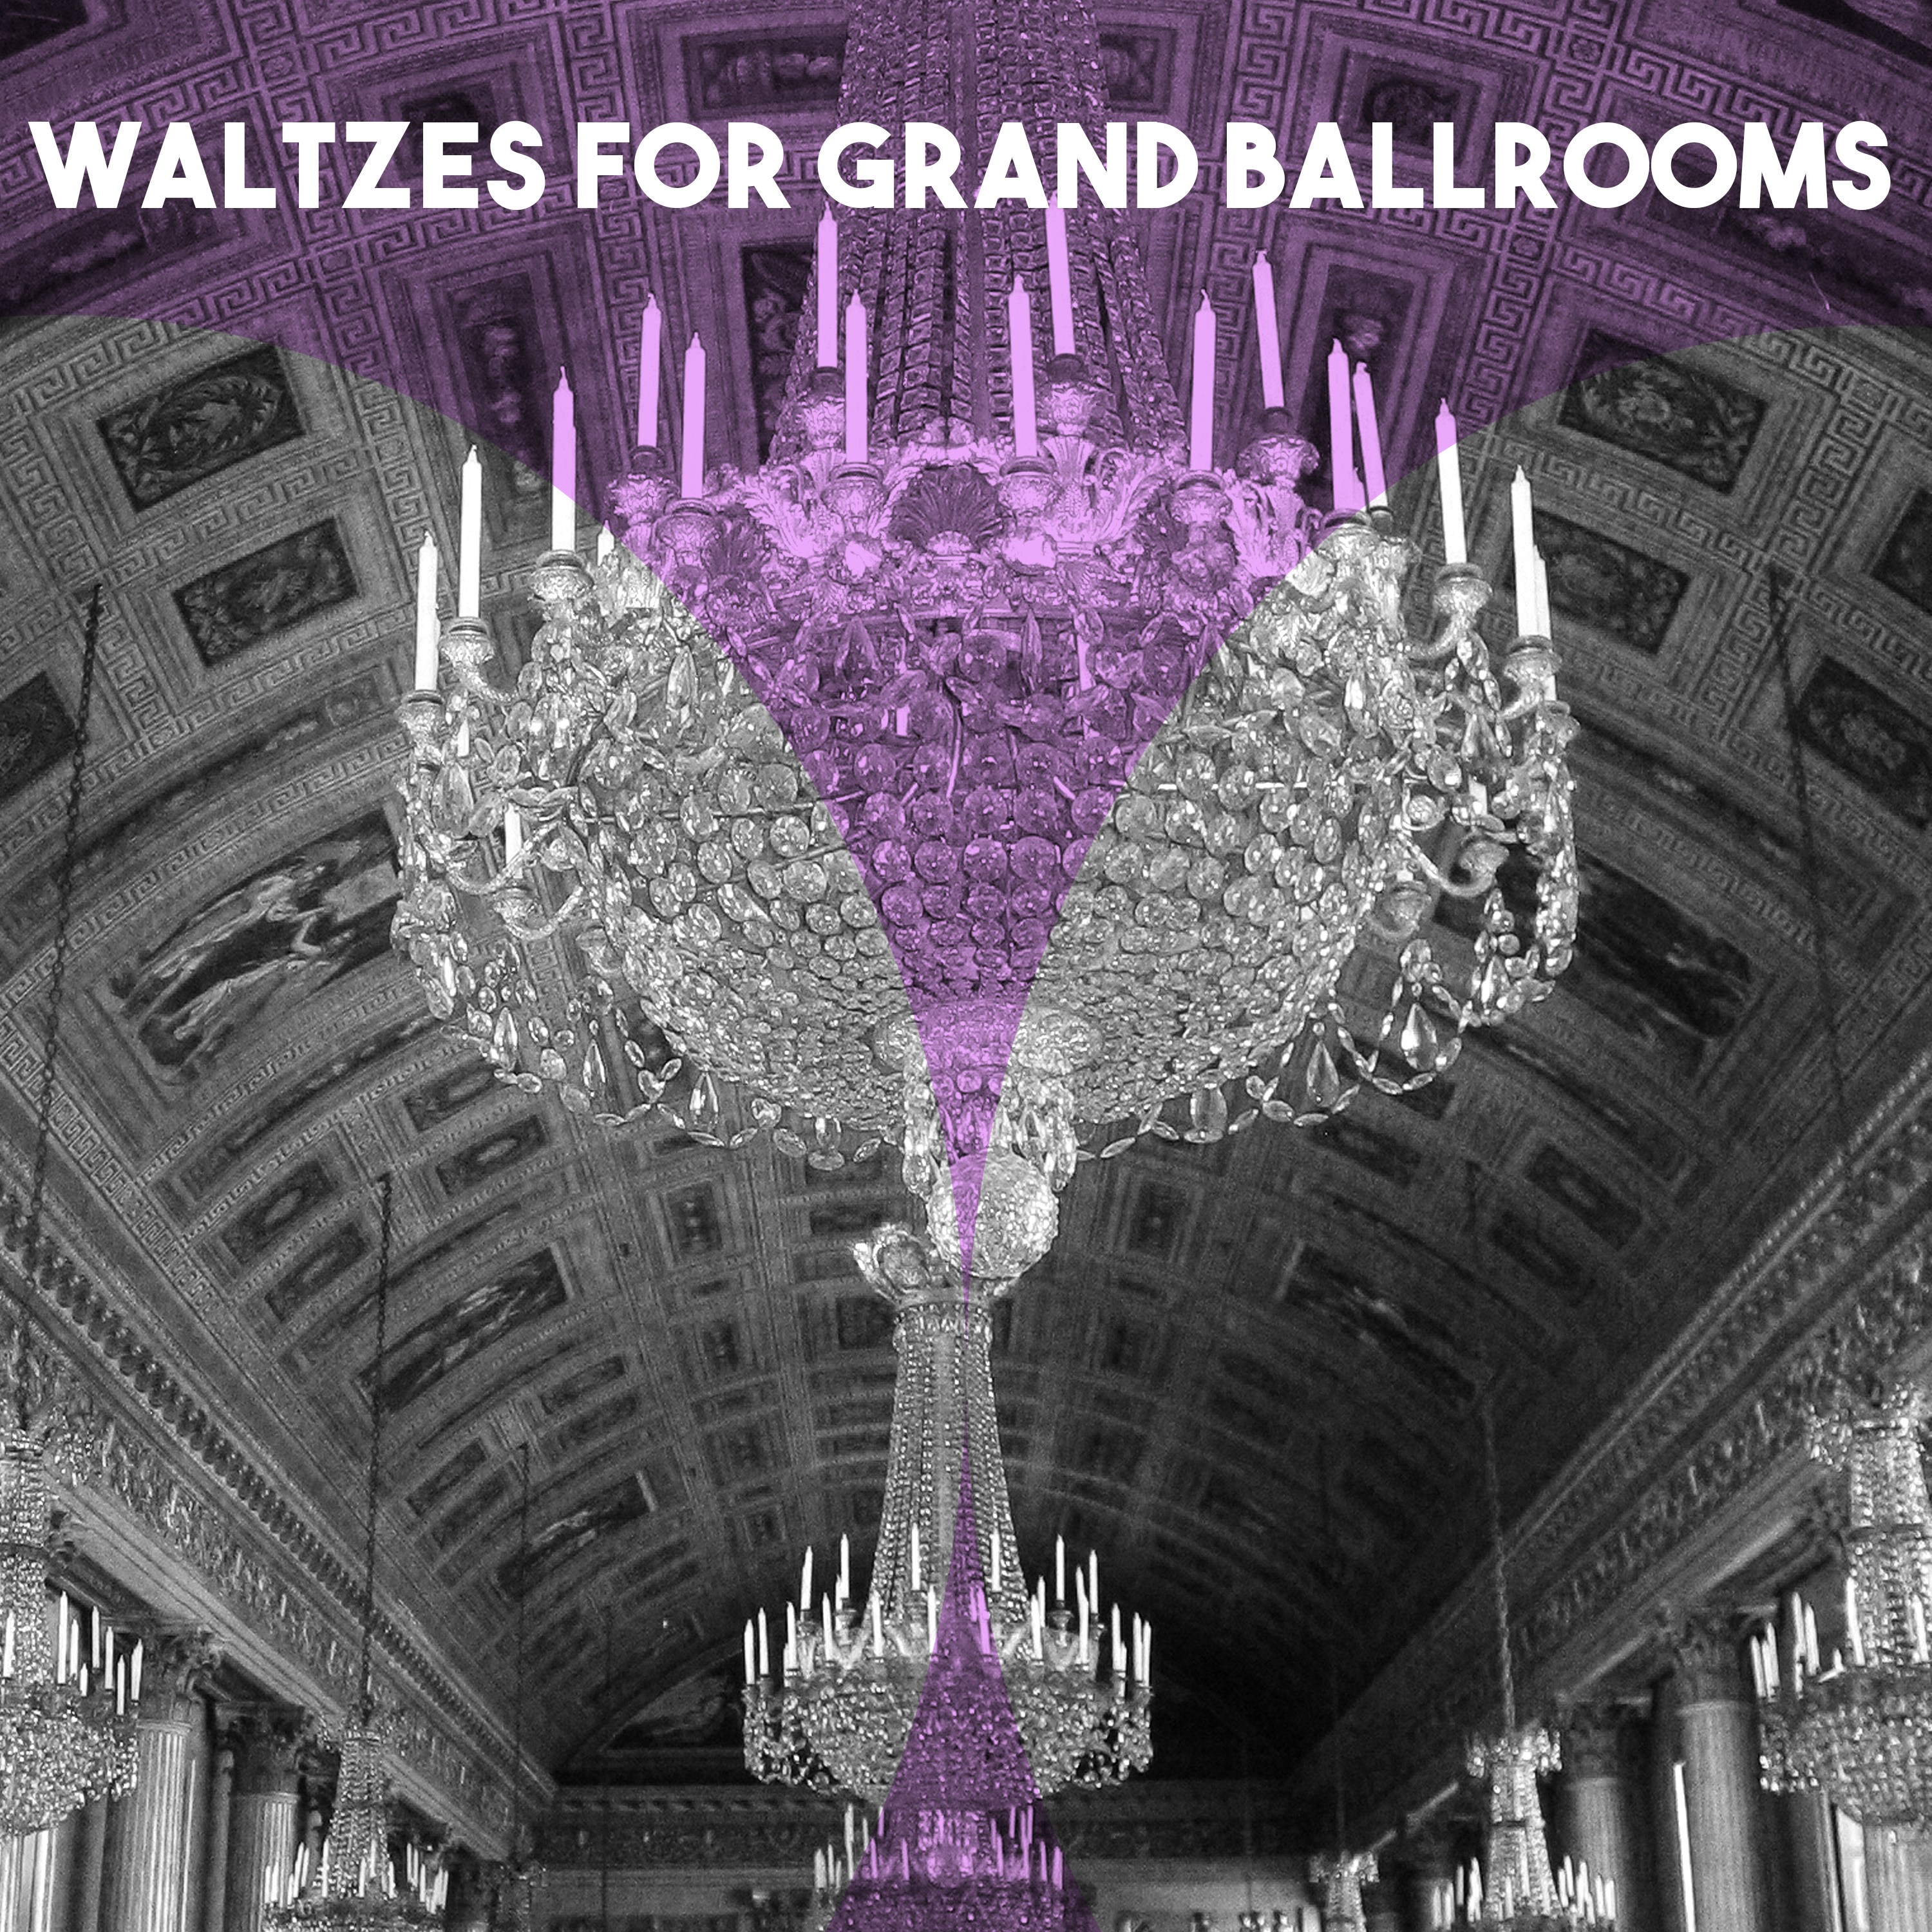 Waltzes for Grand Ballrooms